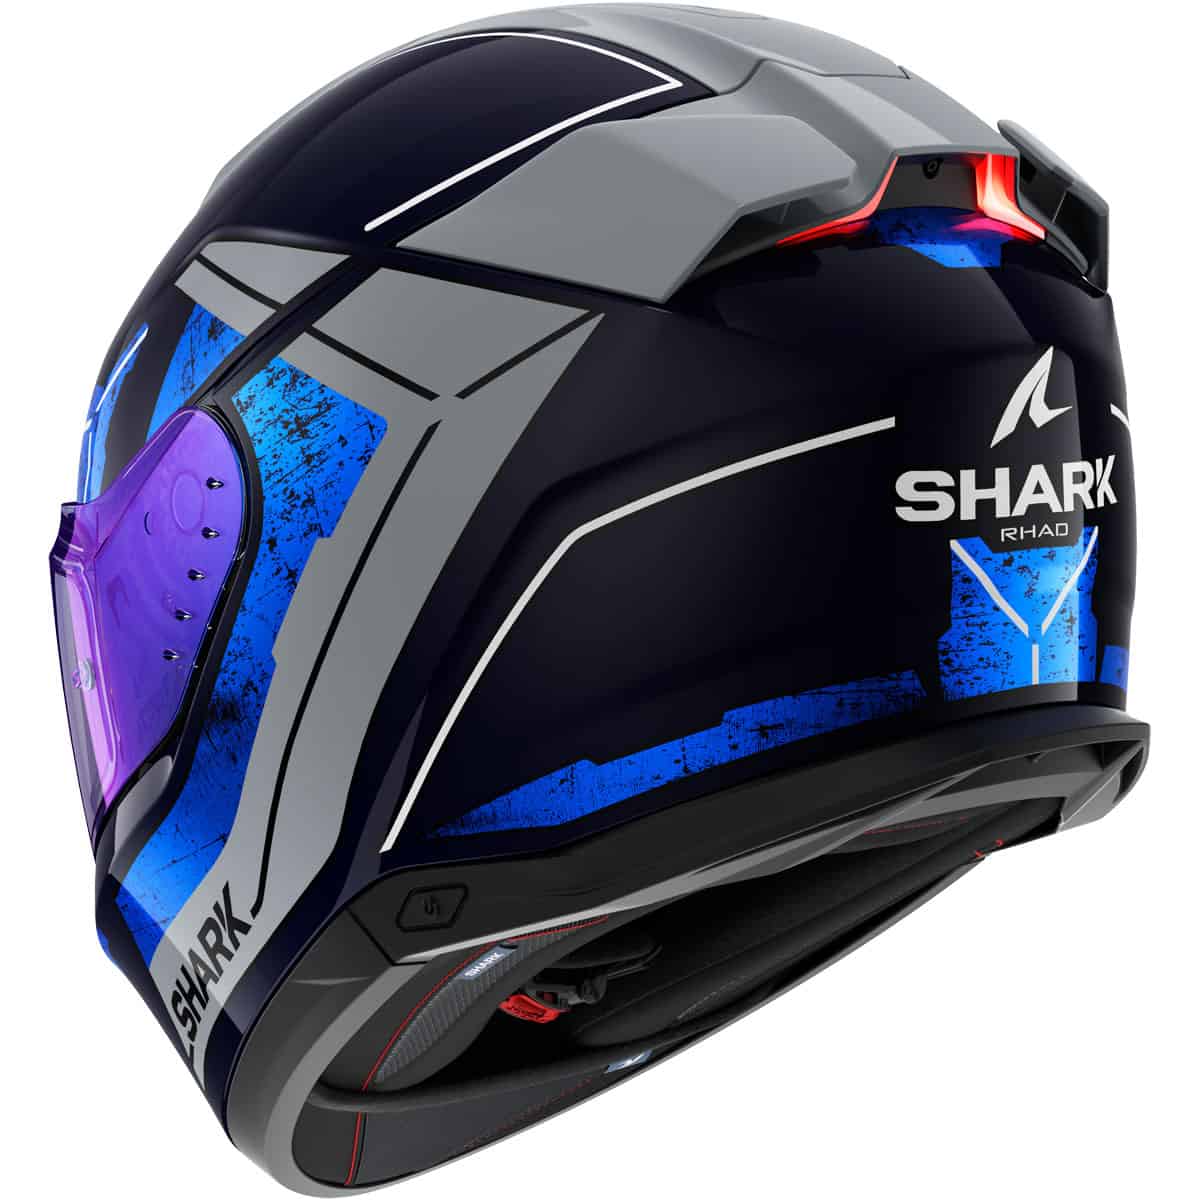 The Shark Skwal i3 helmet is the world's 1st helmet with integrated brake lights. Discover the revolutionary Shark Skwal i3 helmet 2